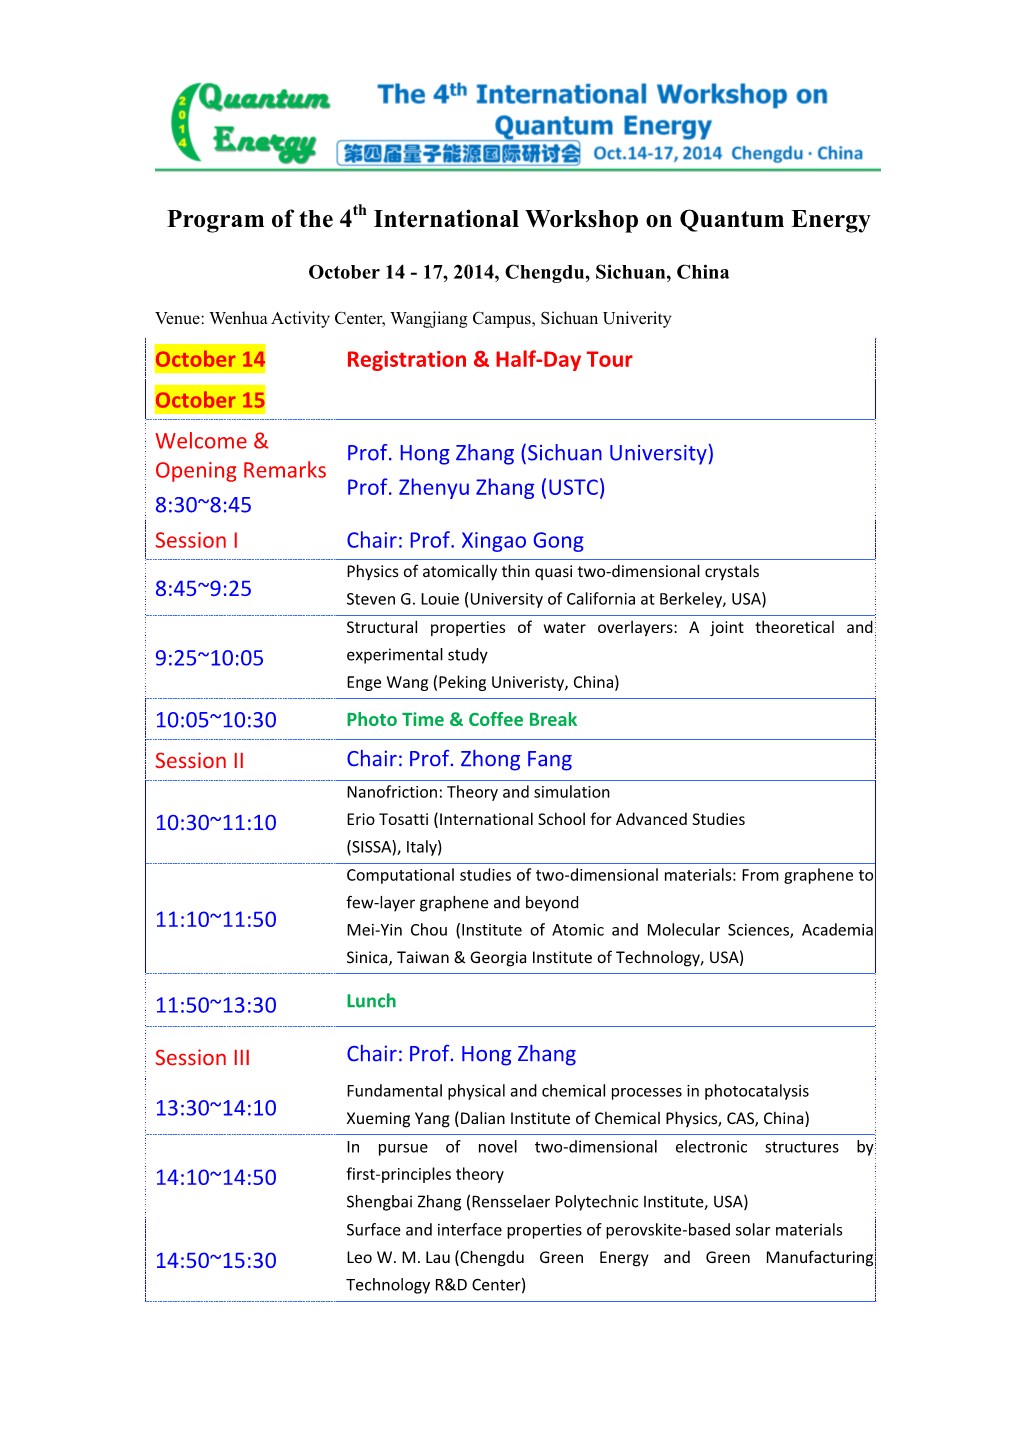 Program of the 4 International Workshop on Quantum Energy